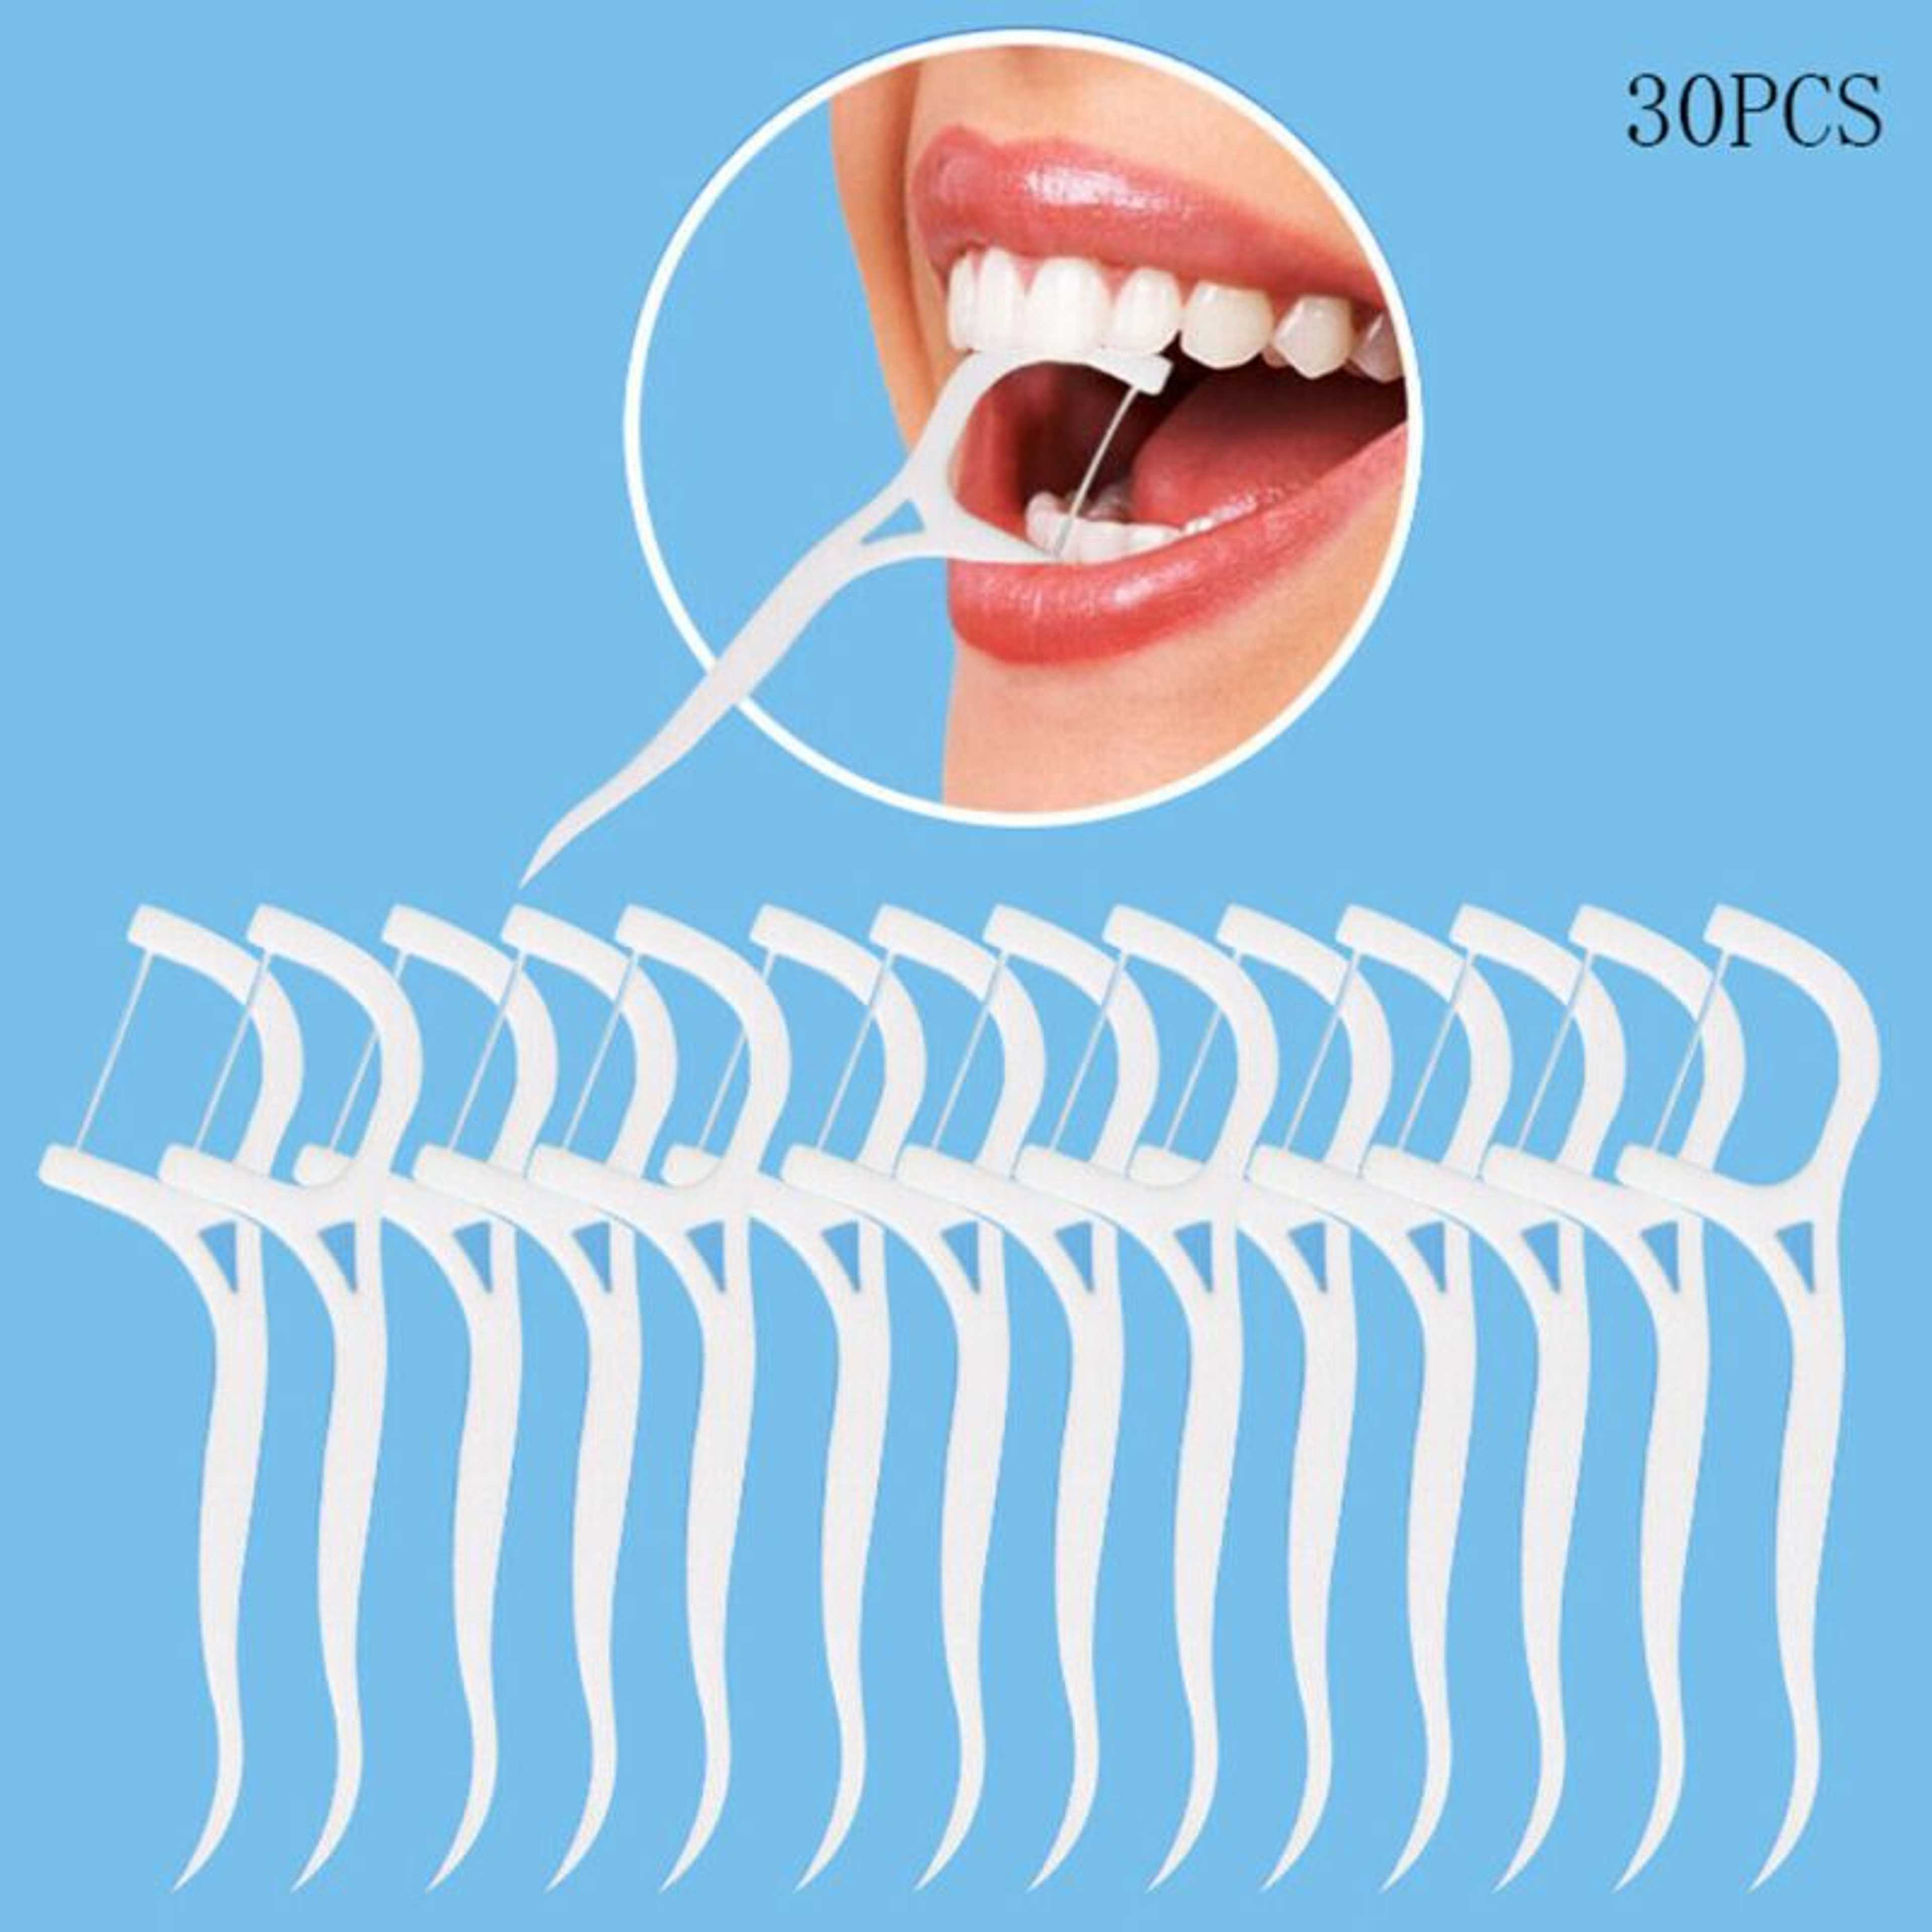 Pack of 30 - Dental Floss Toothpicks, Teeth Cleaning Flosser Toothbrush Toothpicks, Dental Floss Stick, Dental Care Flat Line Flossing Plastic Toothpicks